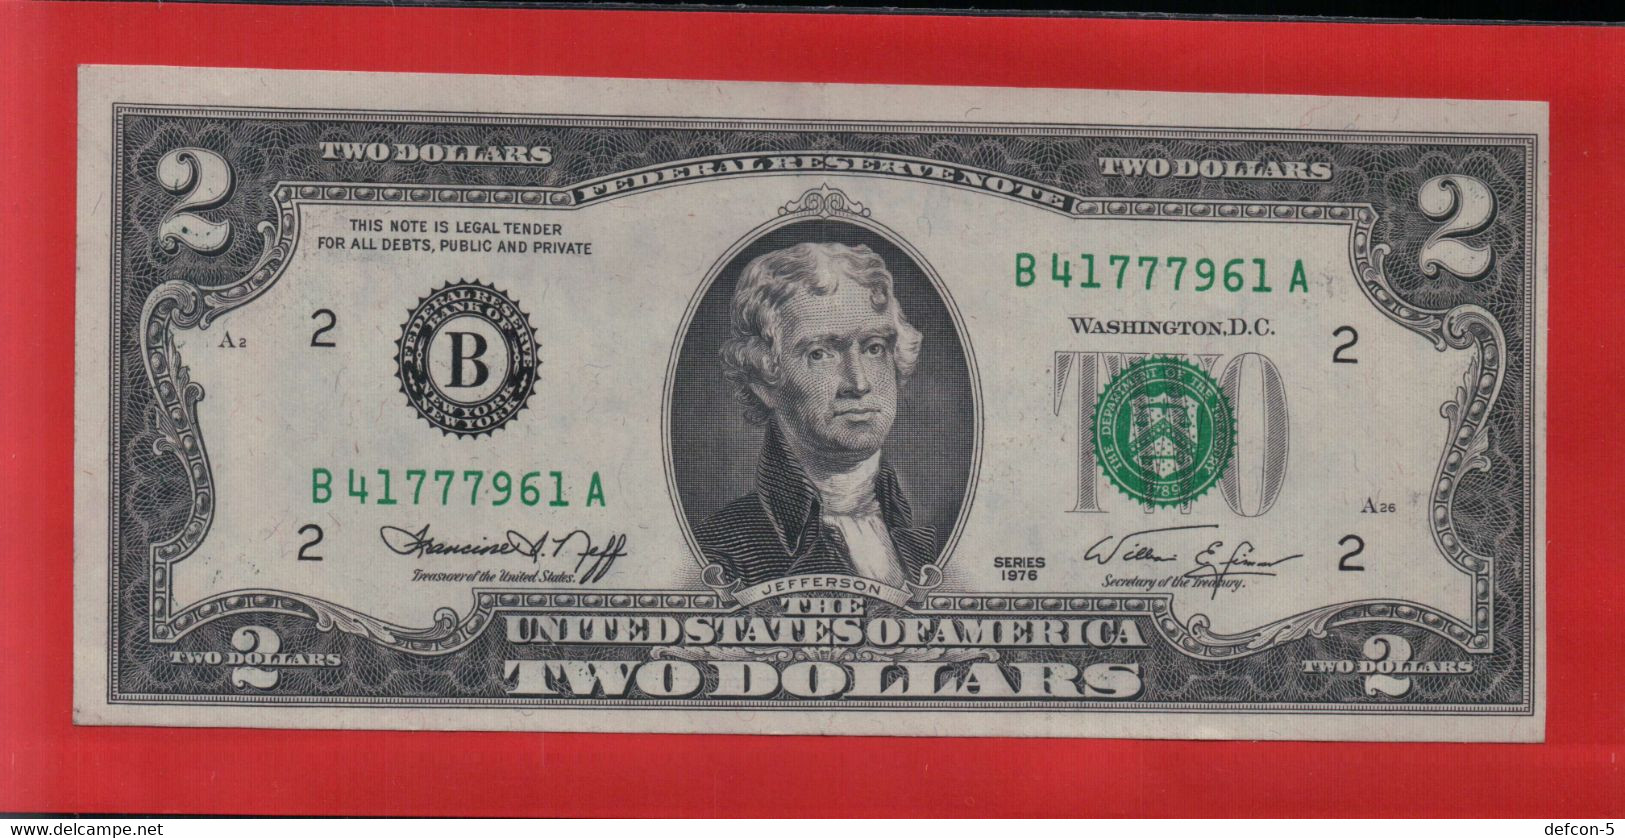 Rarität ! 2 US-Dollar [1976] > B 41777961 A < {$016-002} - National Currency